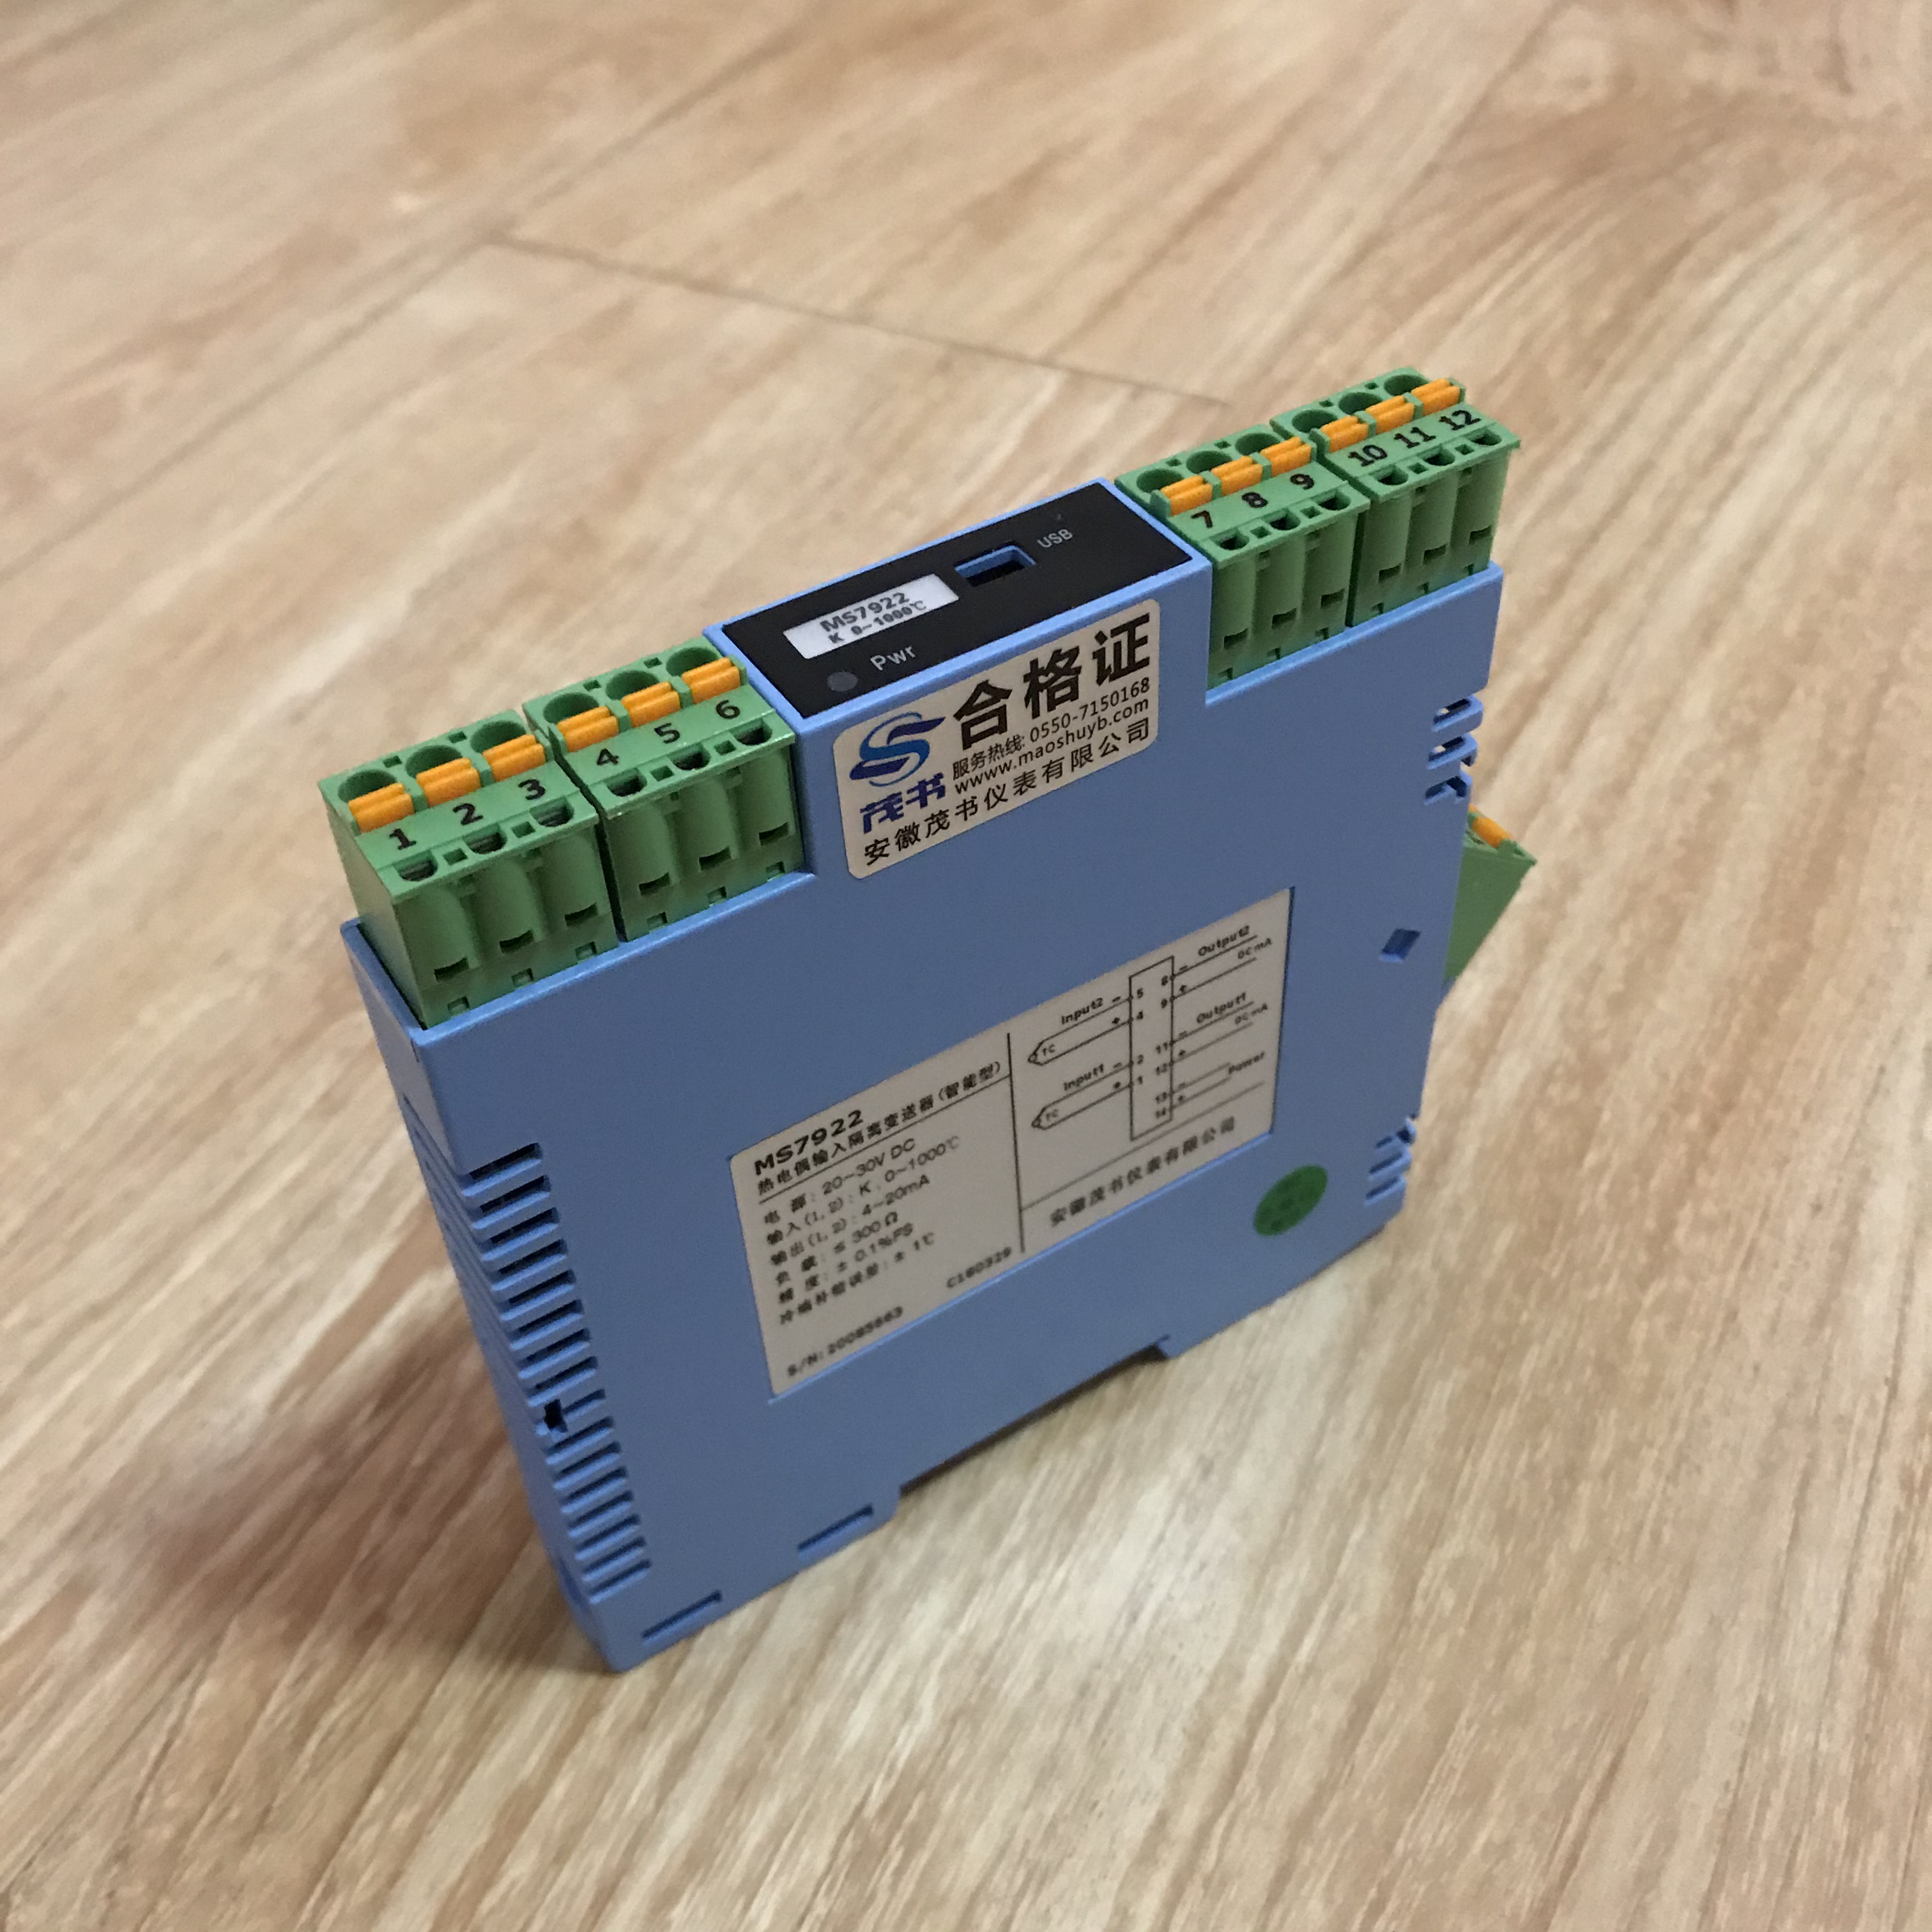 MS7902隔离配电器（支持HART协议通过二入二出）